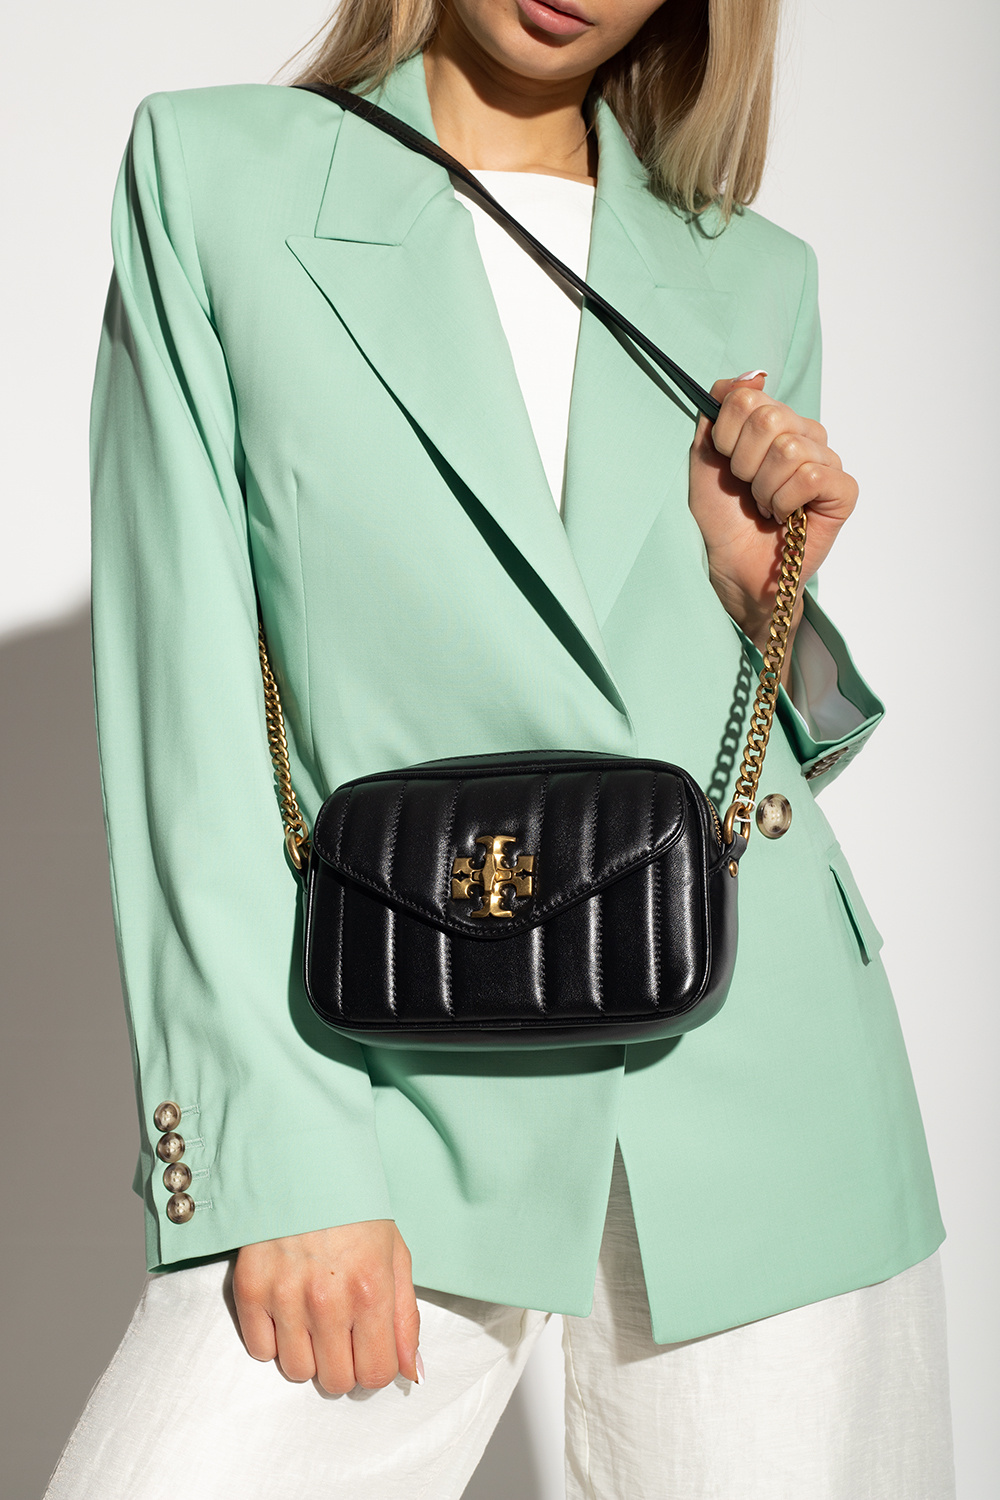 Kira Mini Leather Shoulder Bag in Beige - Tory Burch